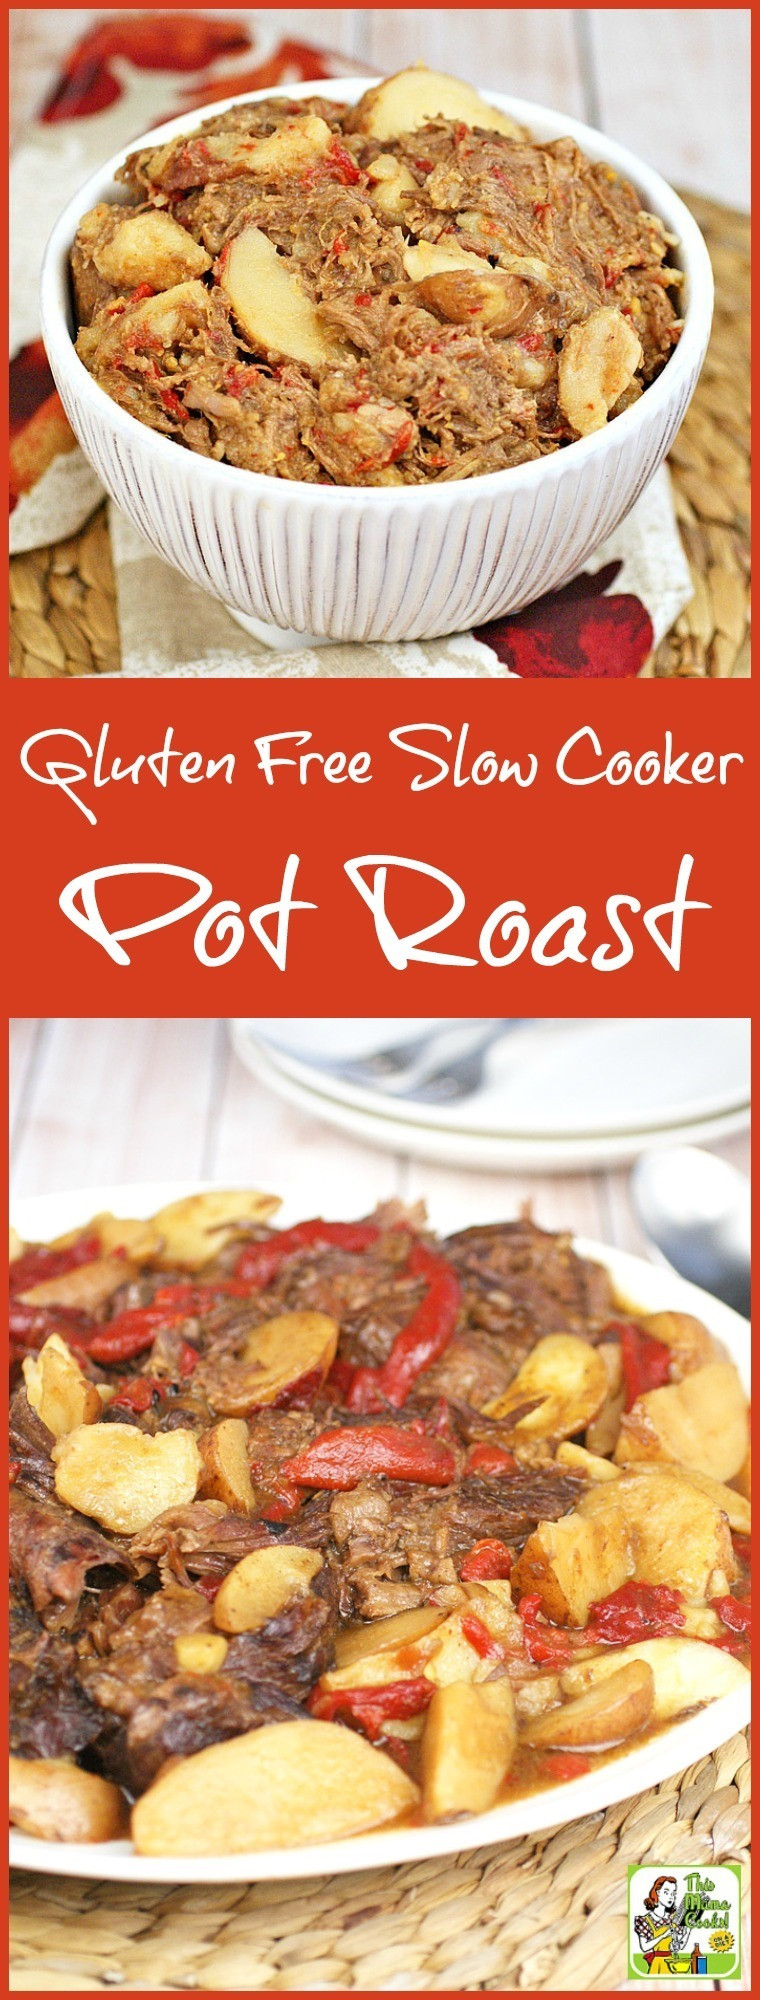 Dairy Free Slow Cooker Recipes
 Gluten Free Slow Cooker Pot Roast